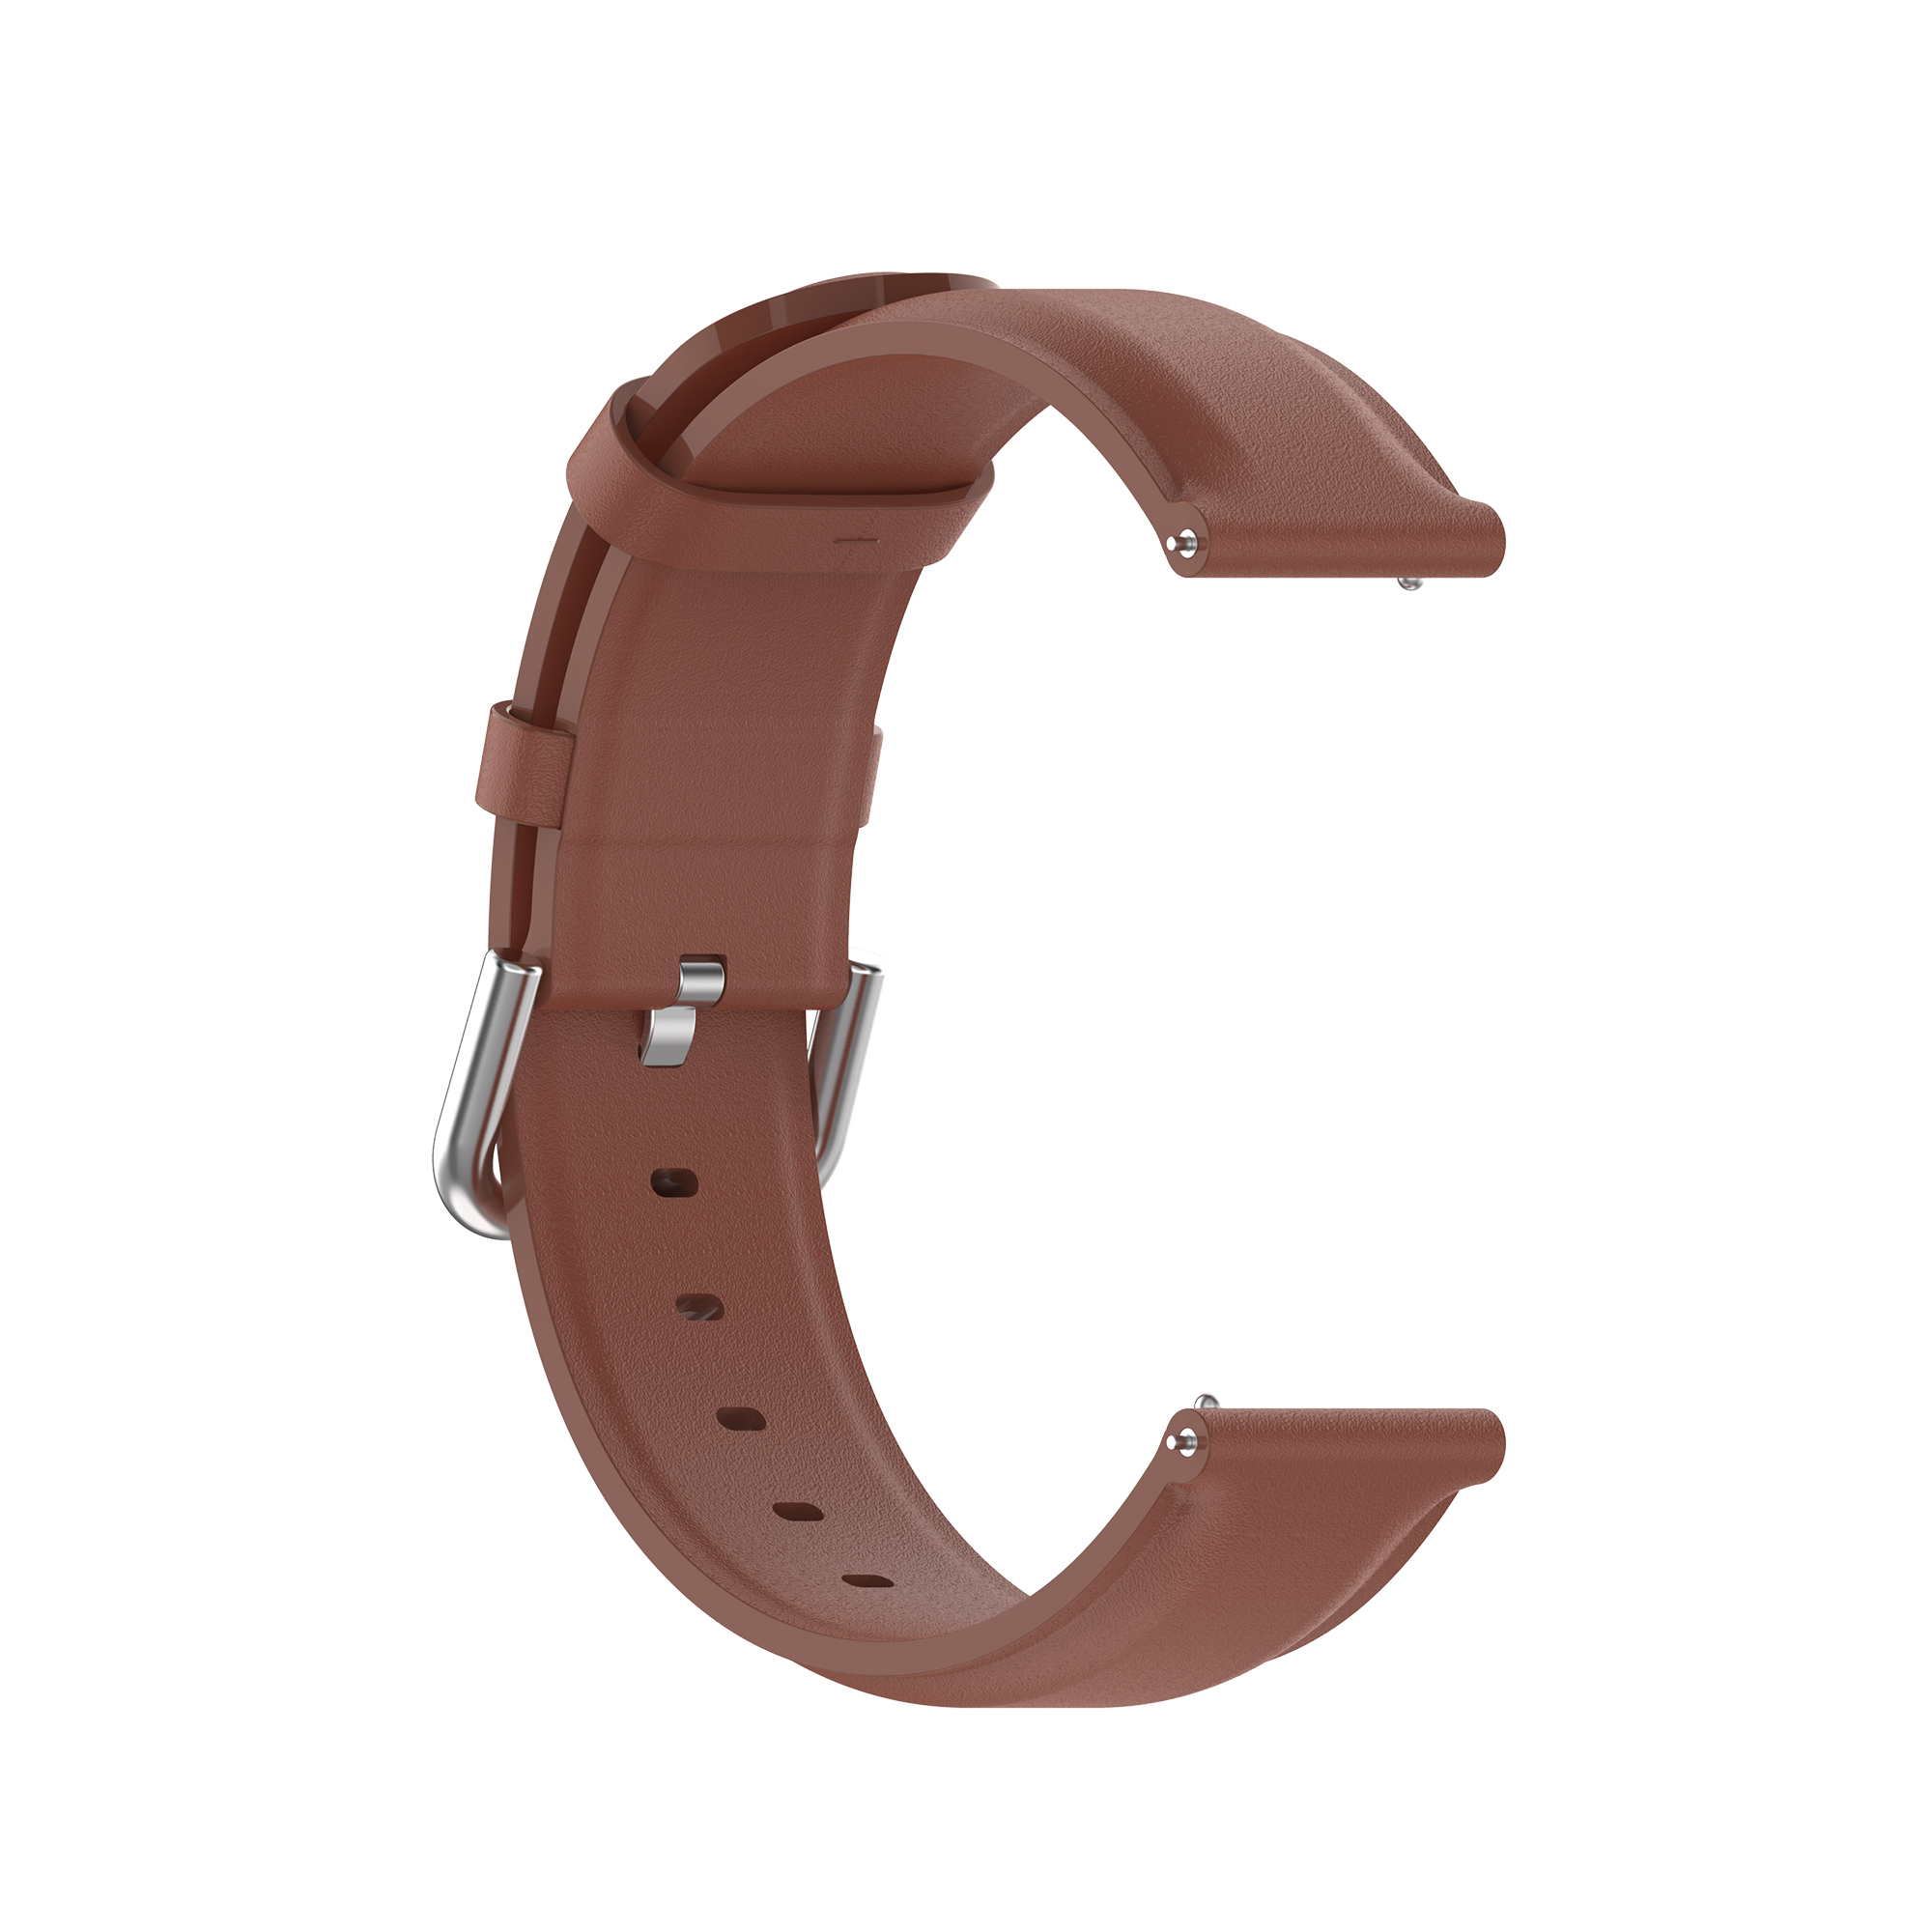 22mm-Universal-Watch-Band-Round-Tail-Leather-Watch-Strap-for-Huawei-Watch-GT2-Pro-Zeblaze-GTS-BW-HL3-1765660-35